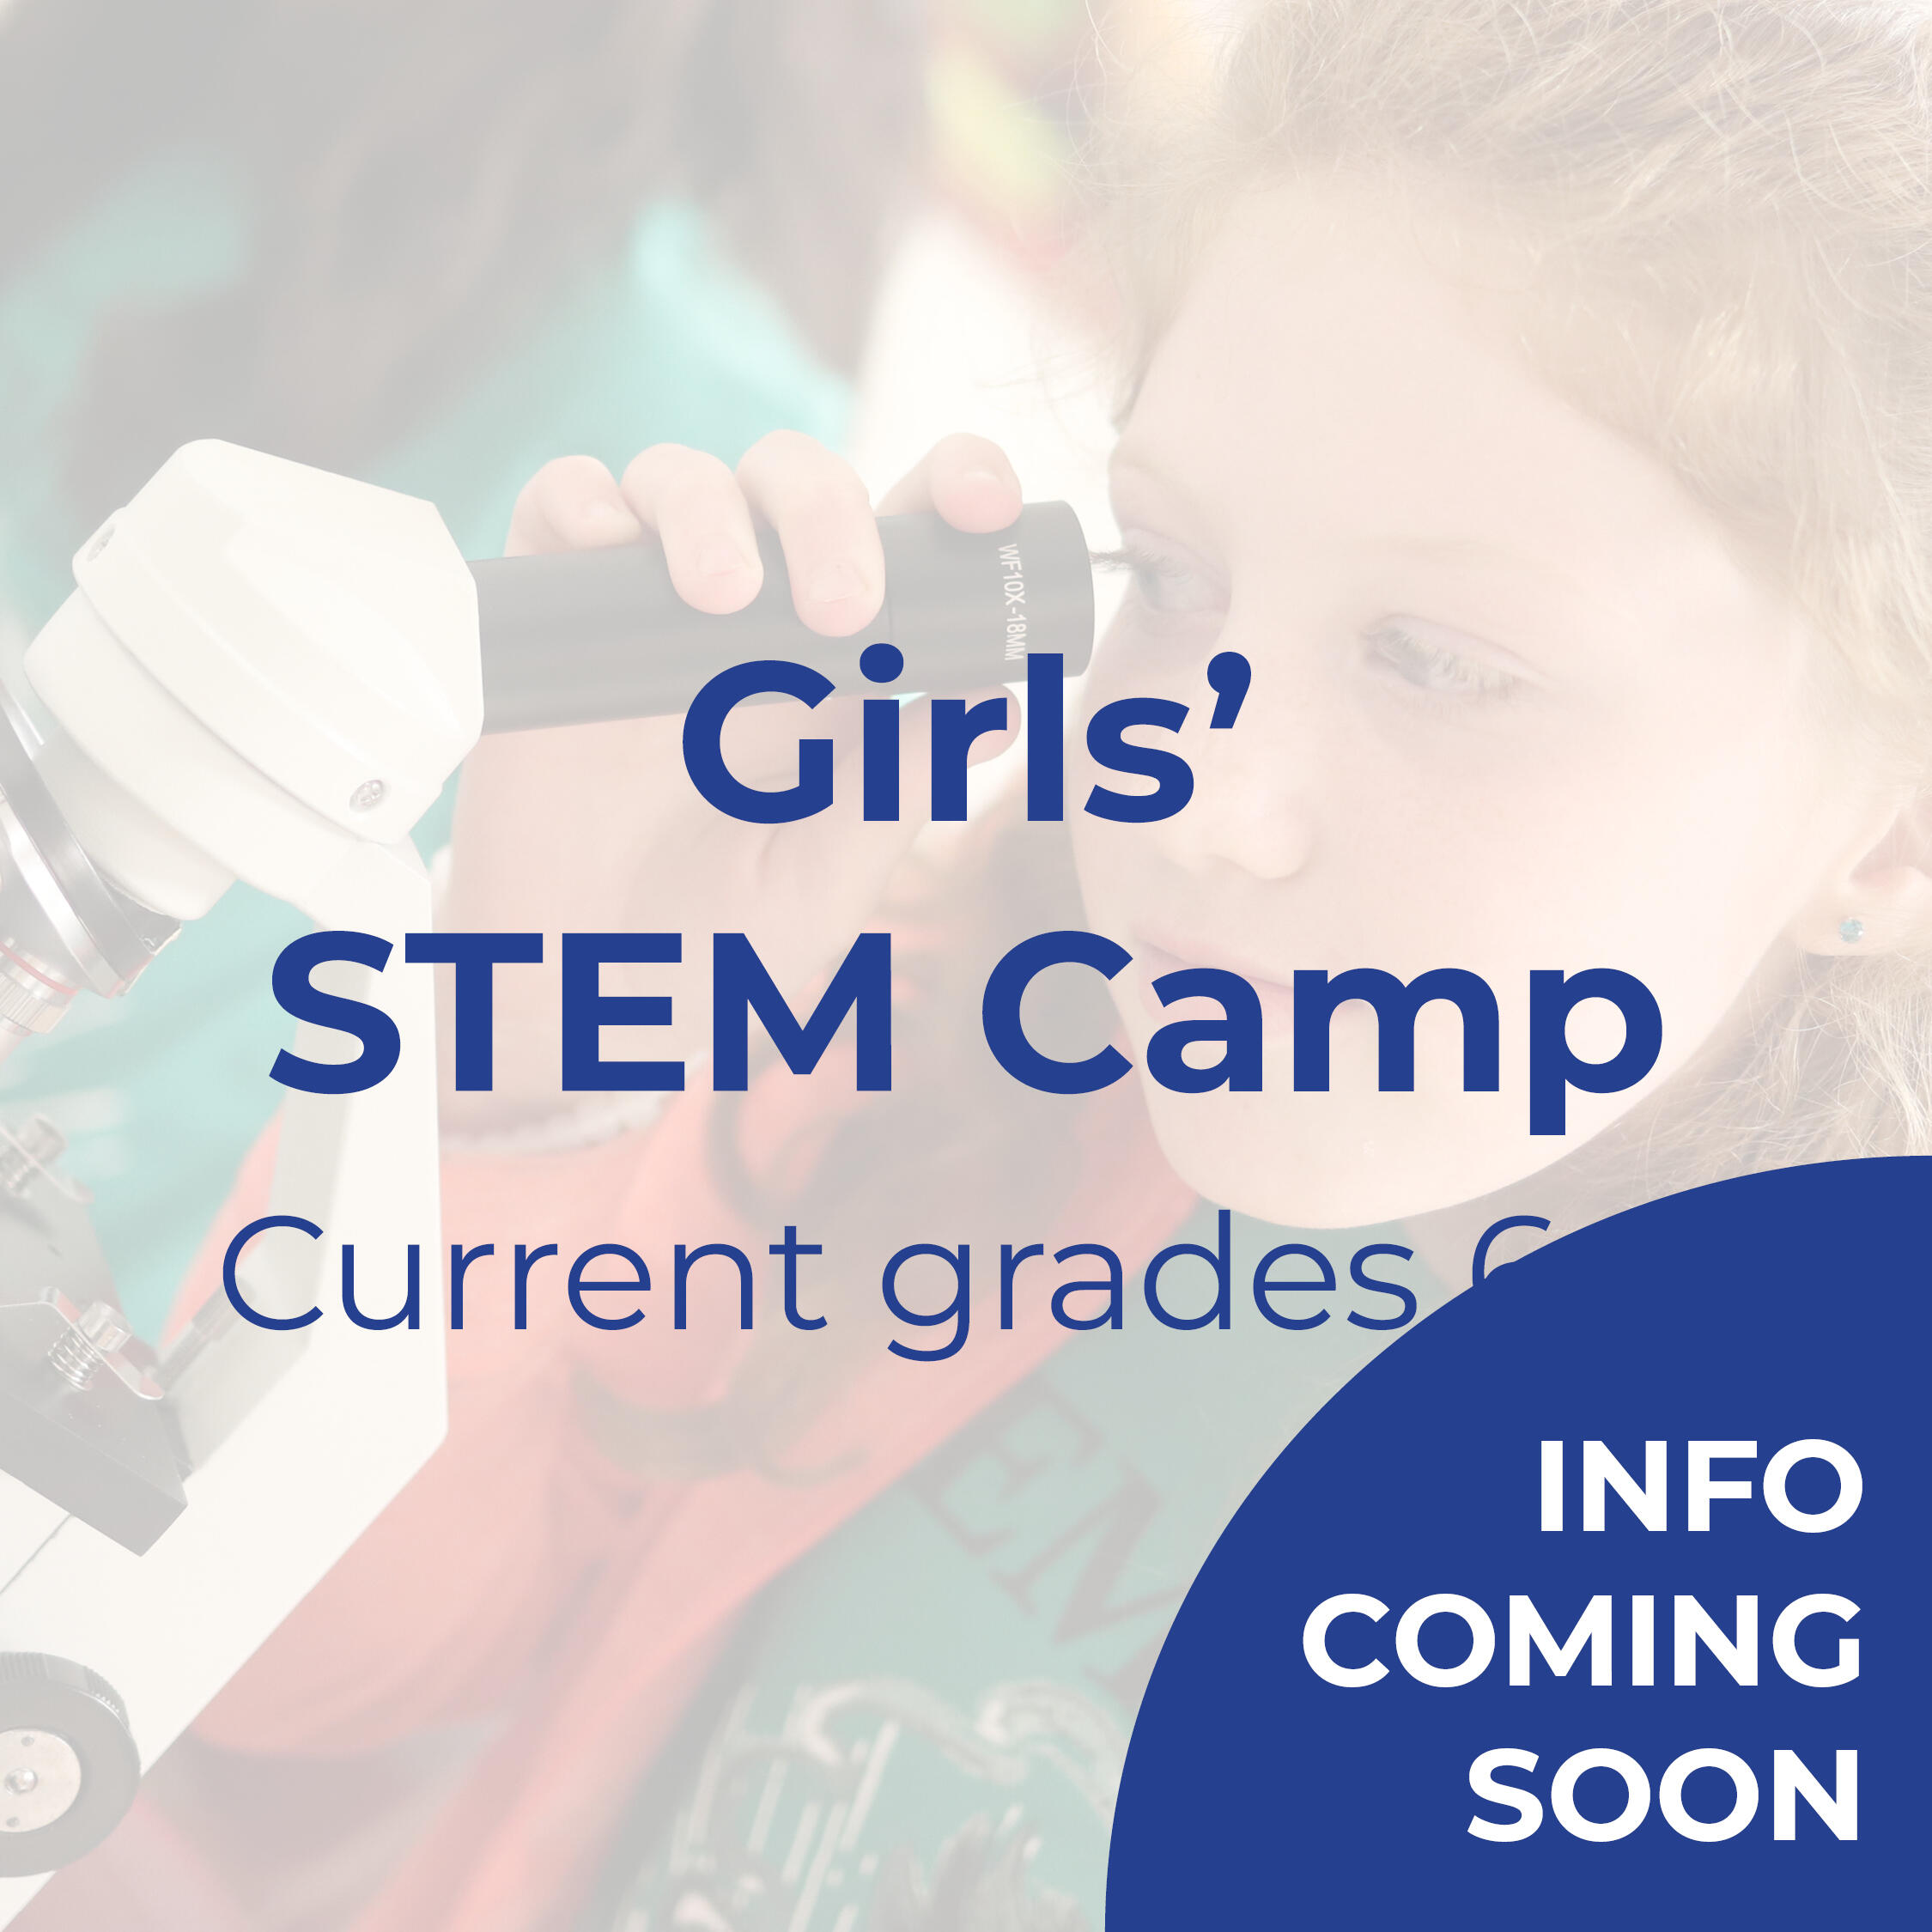 Text that reads "Girls' STEM Camp: Current grades 6-7" 